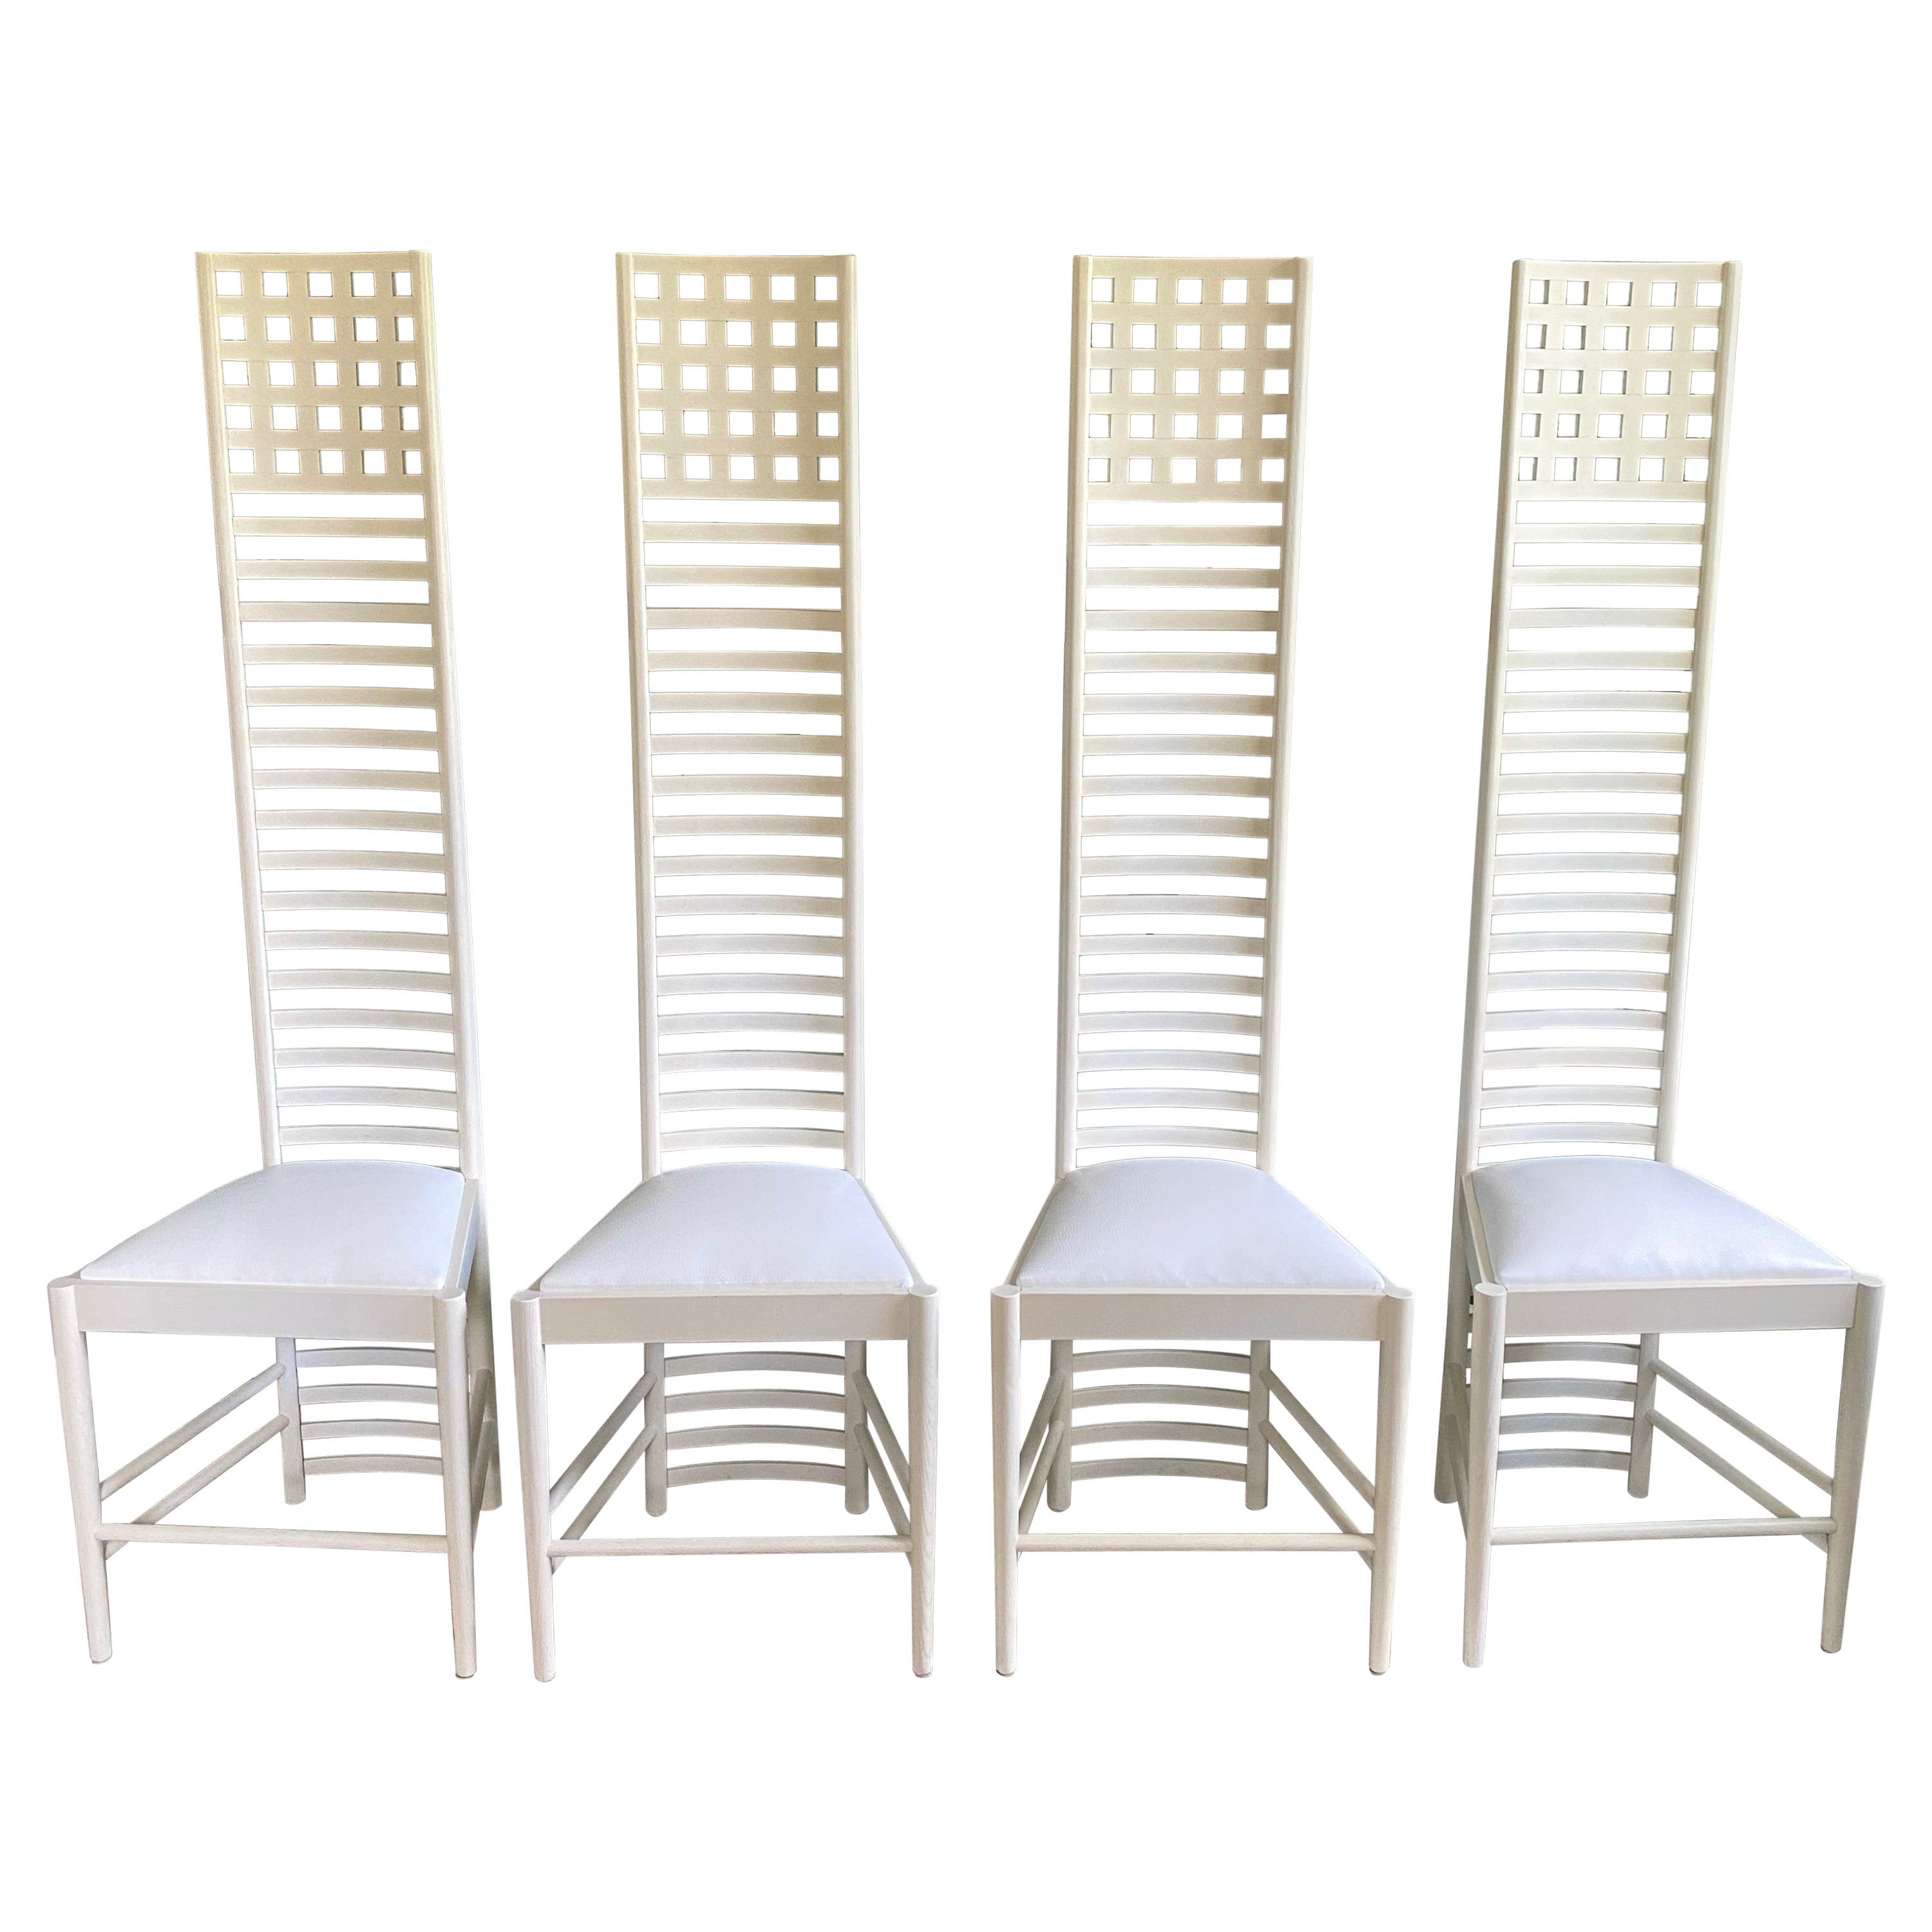 Set of Four, Charles Rennie Mackintosh-Style High Back Chairs by Gordon Mfg.